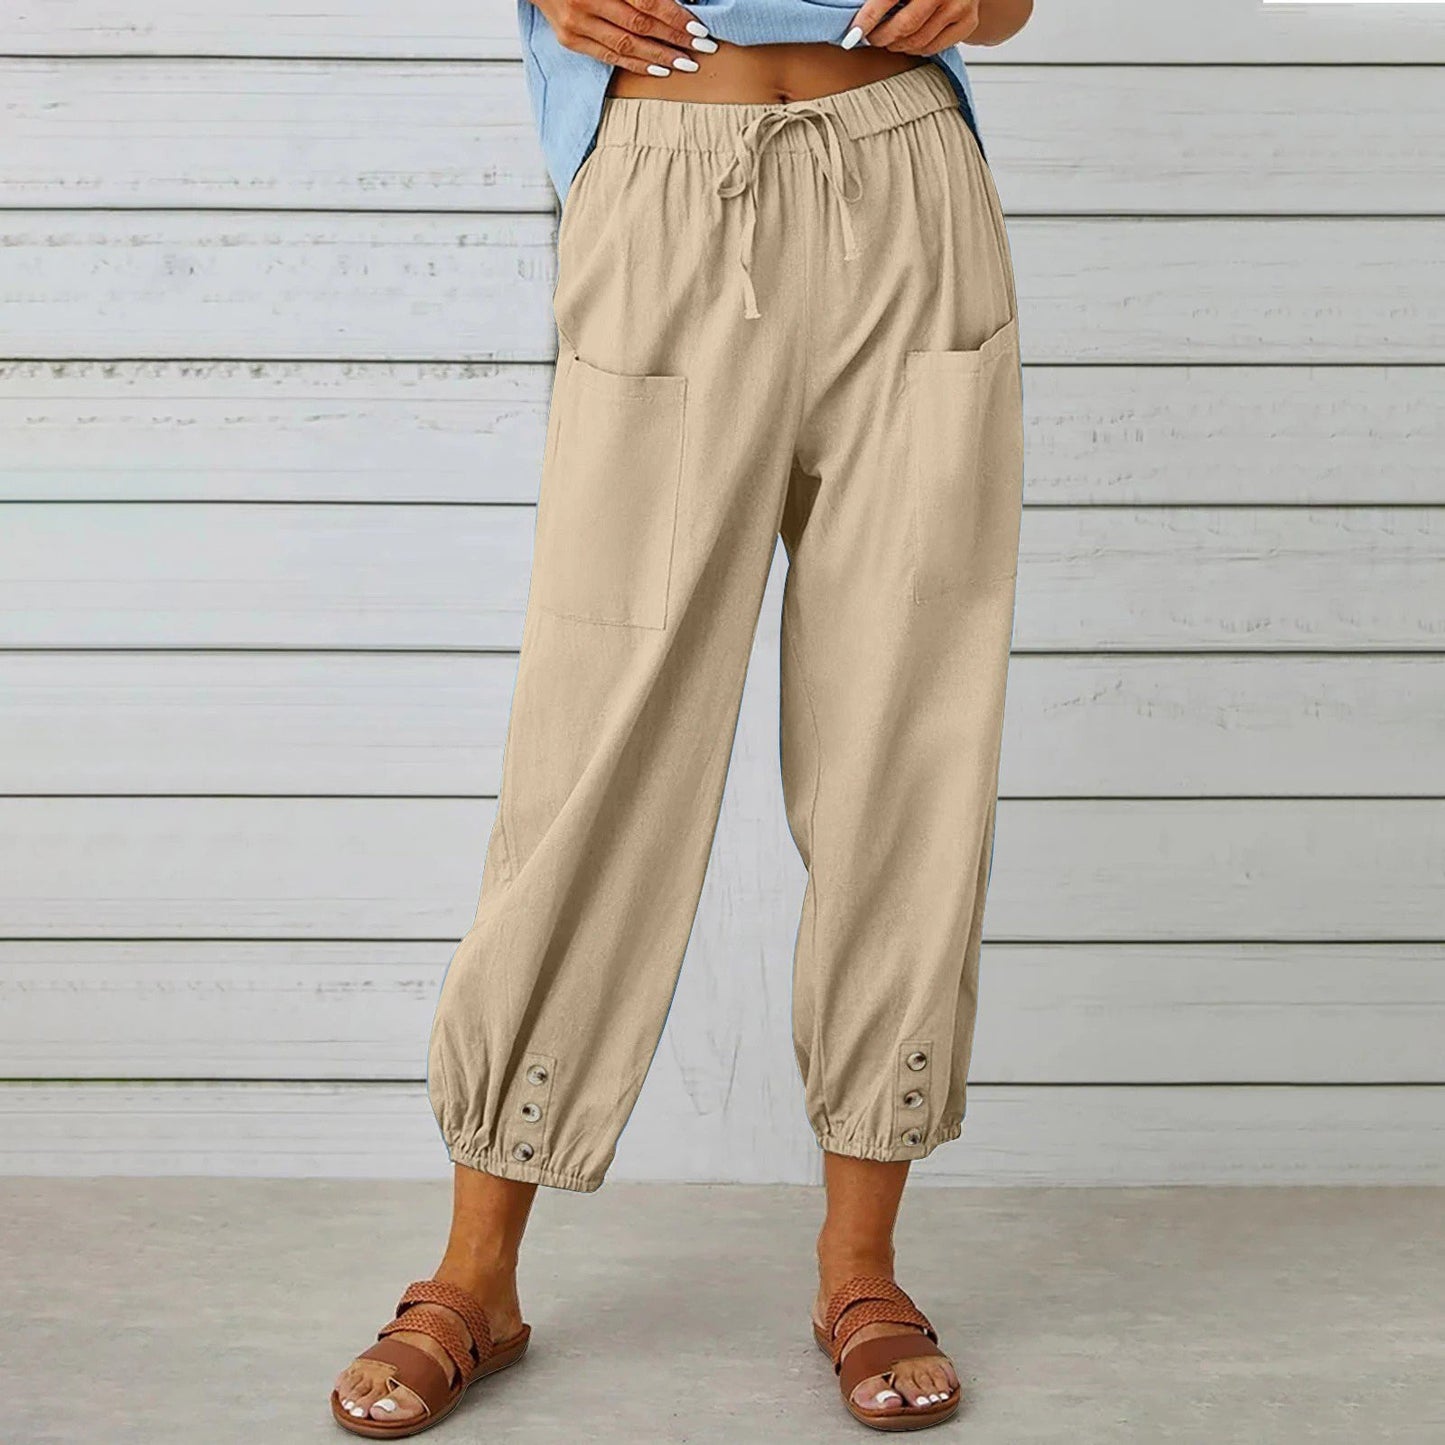 Women's Spring & Summer Boho Harem Pants - Drawstring Waist & Pockets